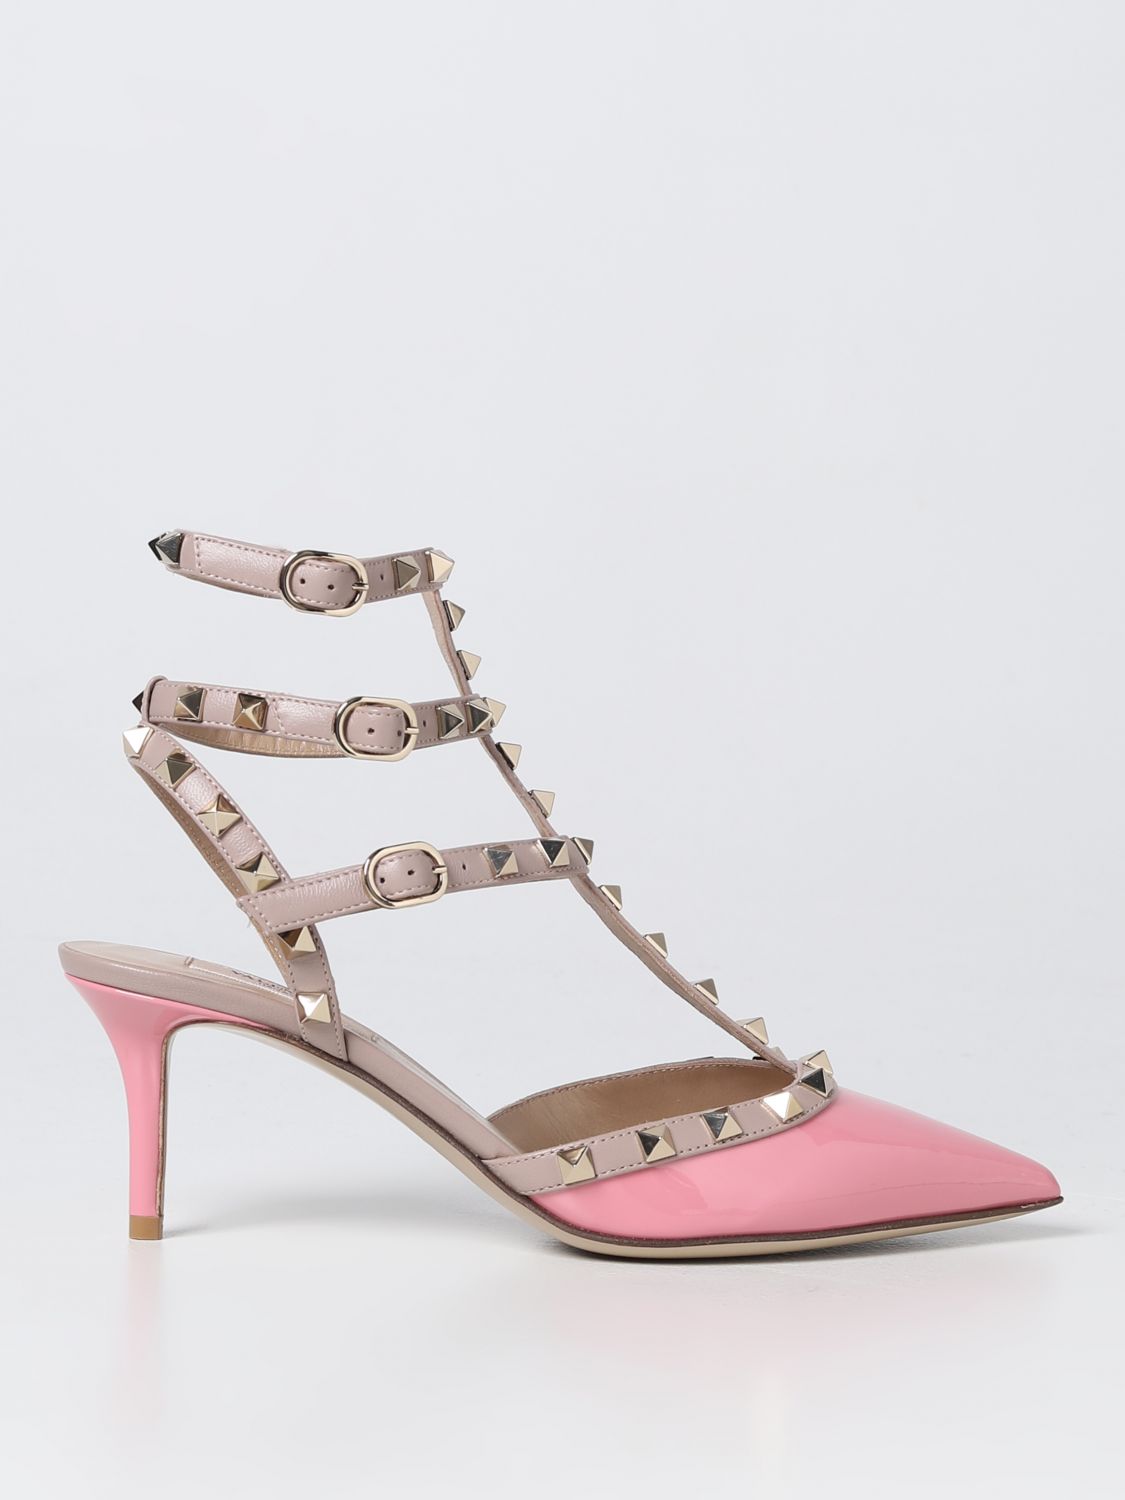 VALENTINO GARAVANI: high heel shoes for woman - Pink | Valentino Garavani high heel shoes 2W2S0375VNW online GIGLIO.COM